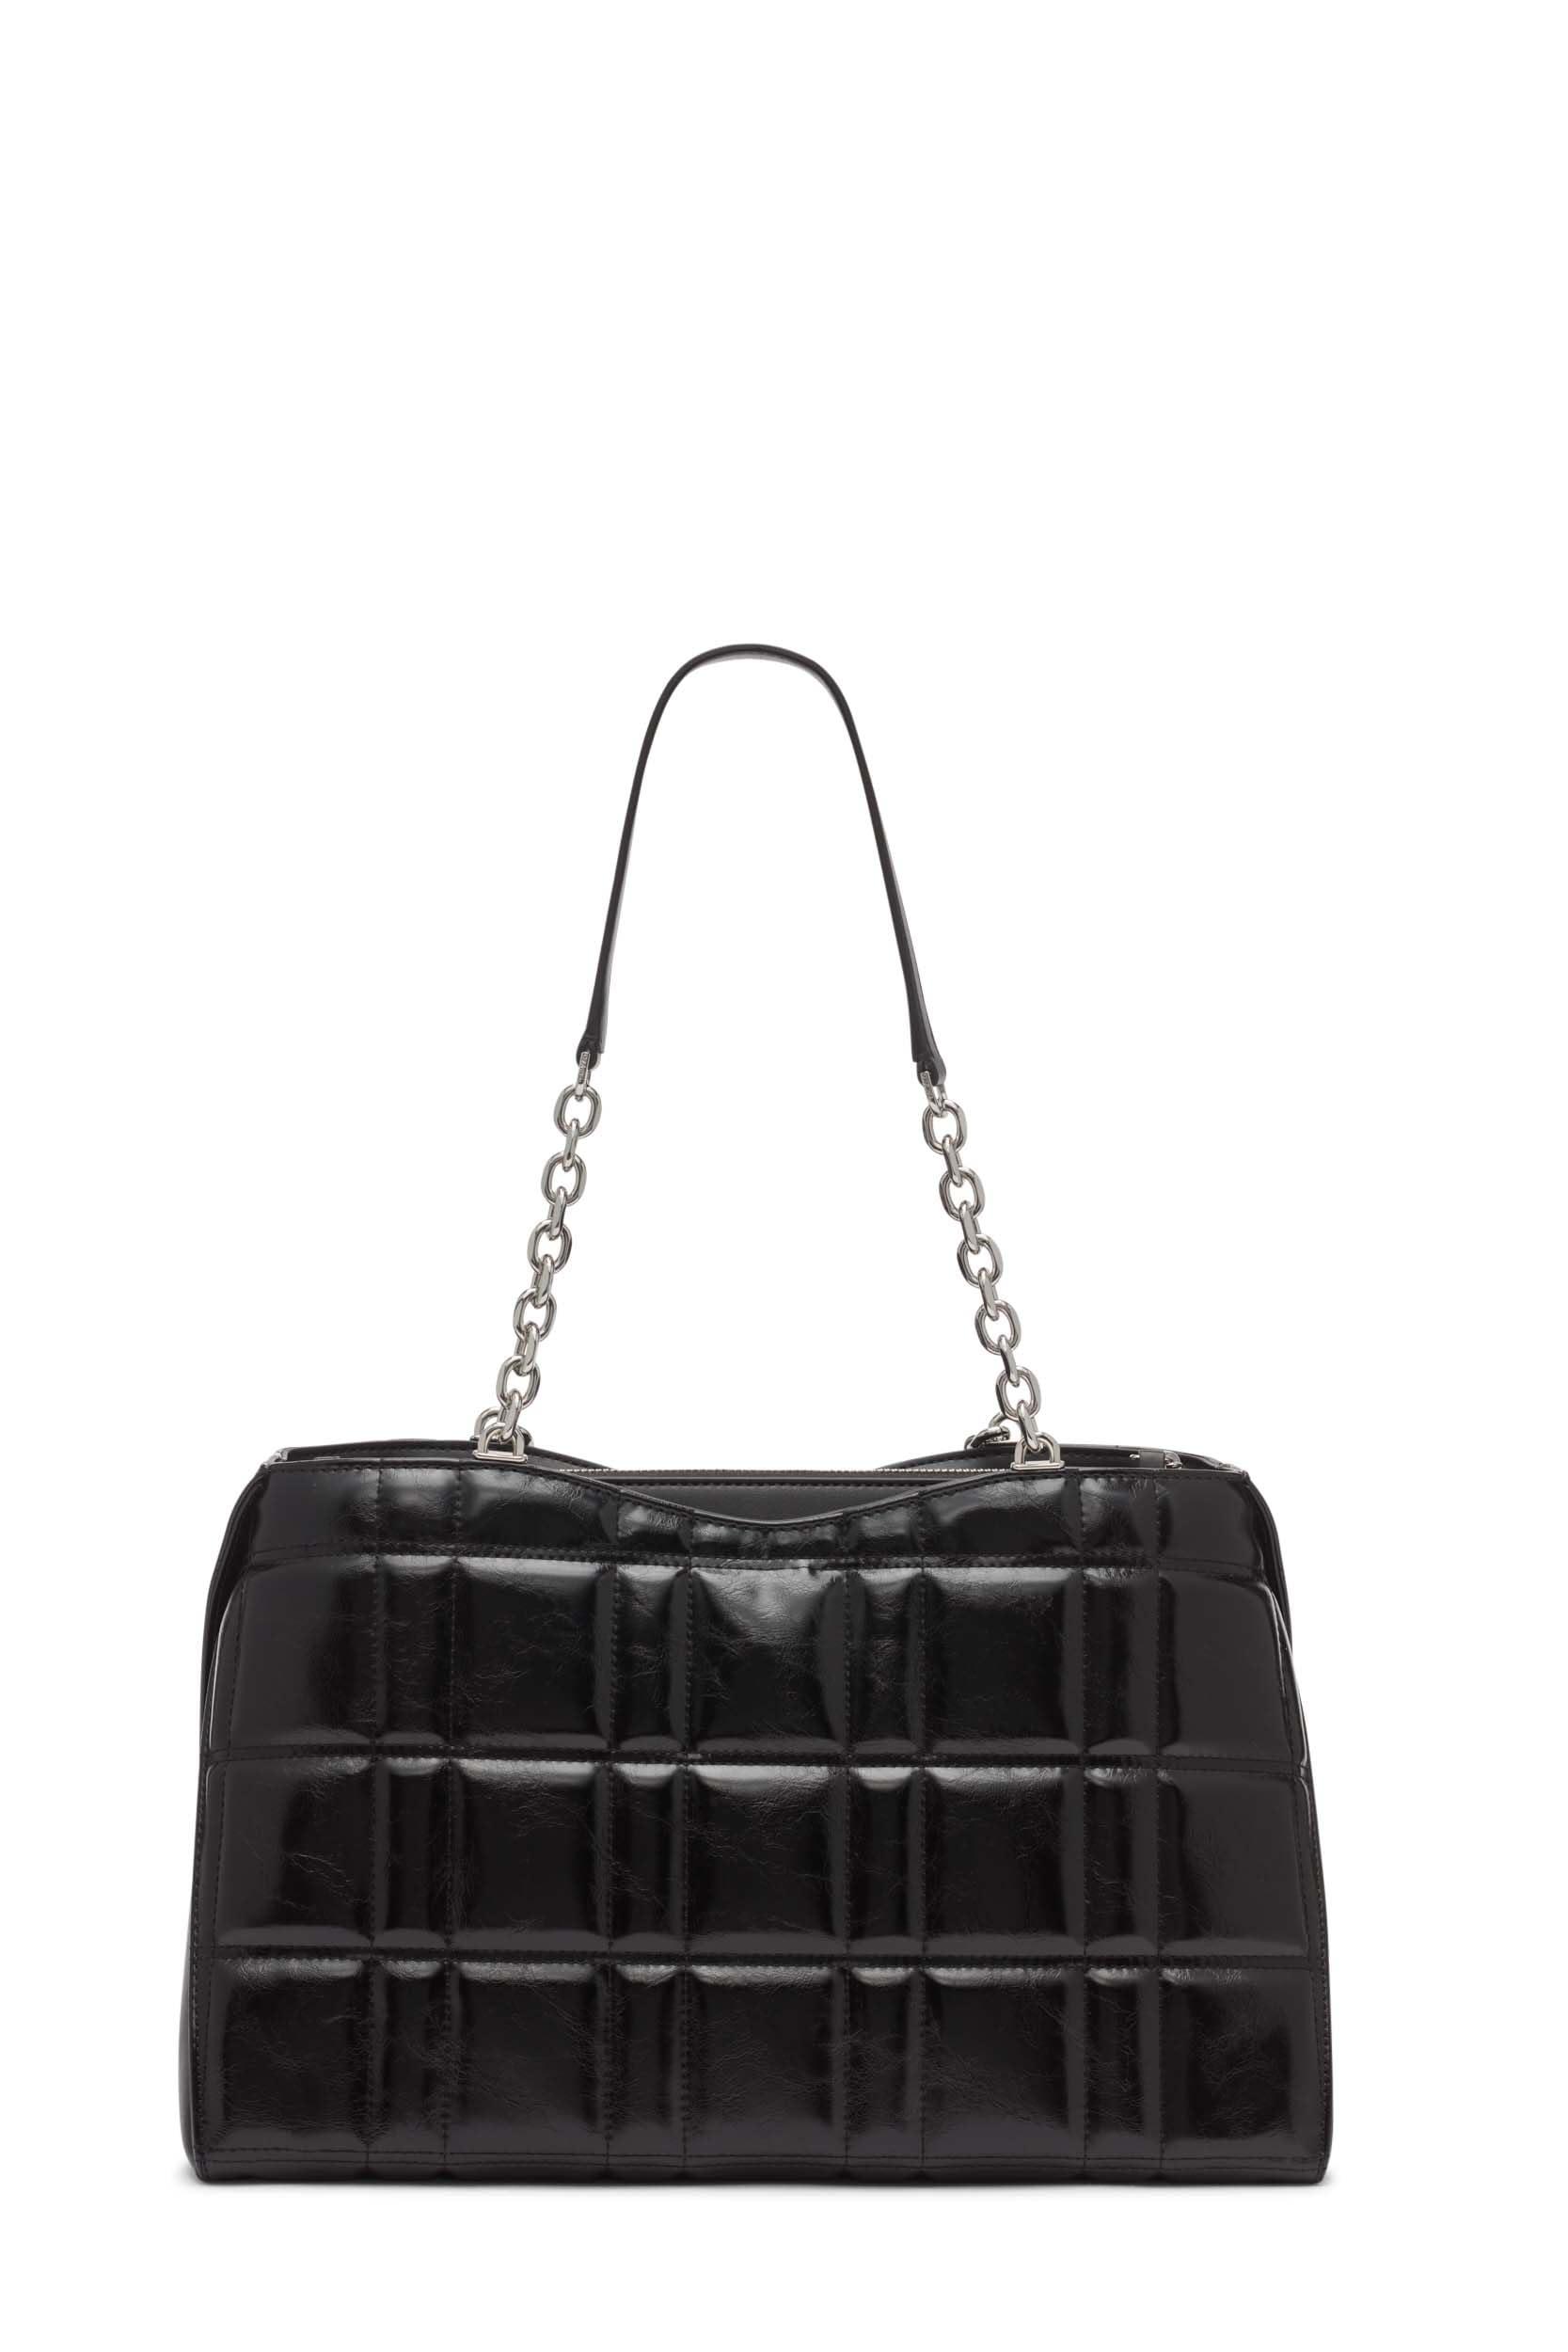 Calvin Klein Hailey Micro Pebble Shoulder Bag, Caramel 1, One Size price in  Saudi Arabia,  Saudi Arabia